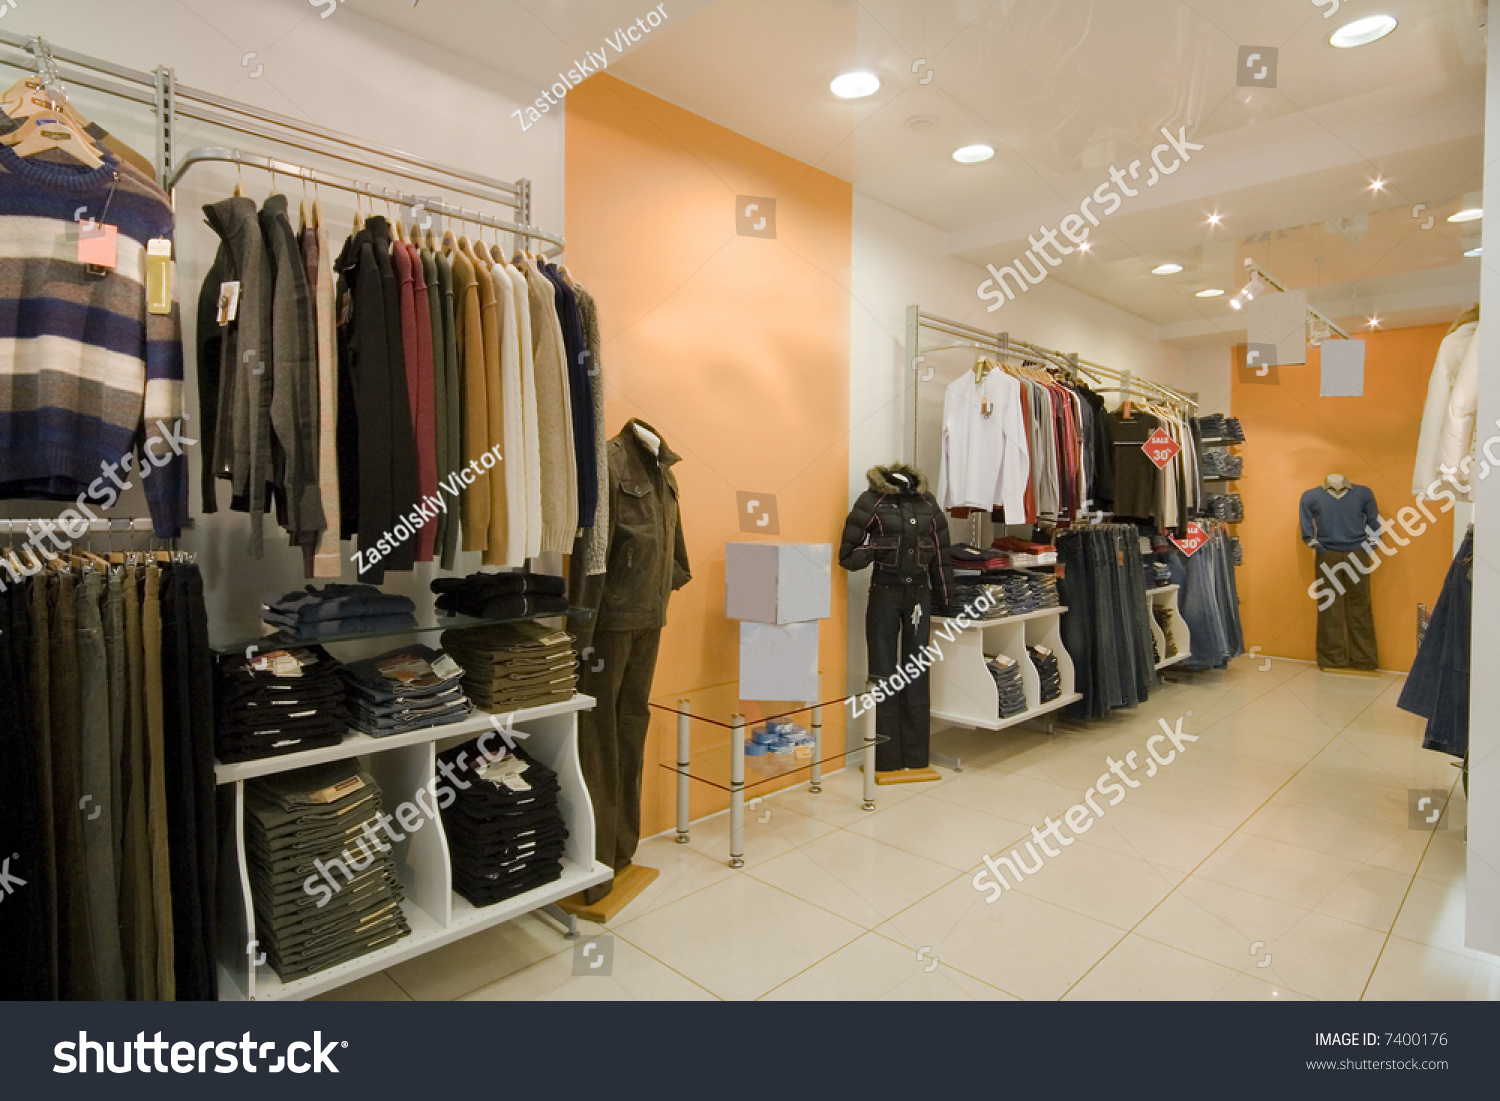 The Modern Cloth Shop Interior Photo - 7400176 : Shutterstock